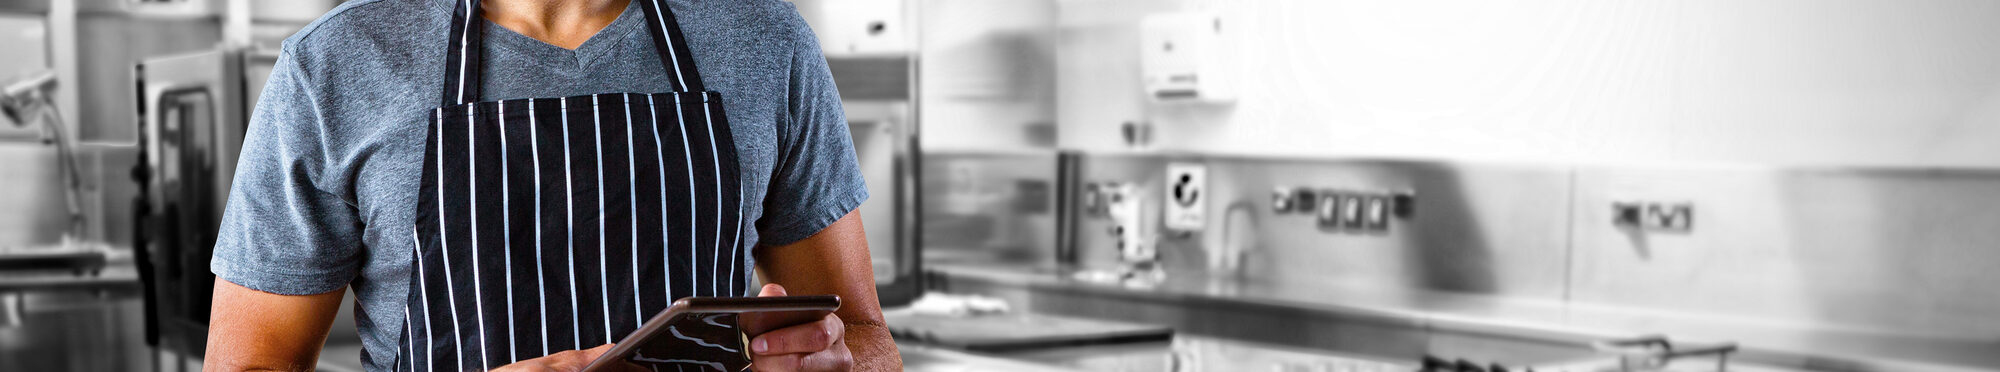 Motivbild Küche Hygiene [Foto: ©vectorfusionart - stock.adobe.com]